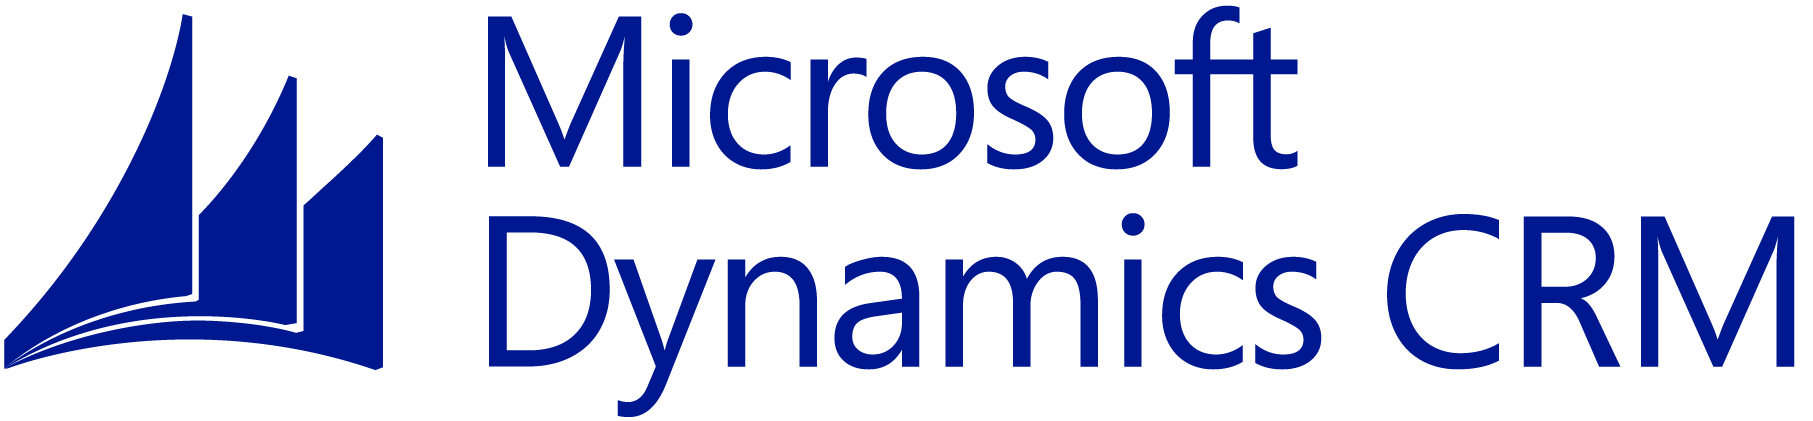 Dynamics CRM 2011 Logo - Microsoft Dynamics CRM 2011 Update Rollup 16 - Dynamics Consulting ...